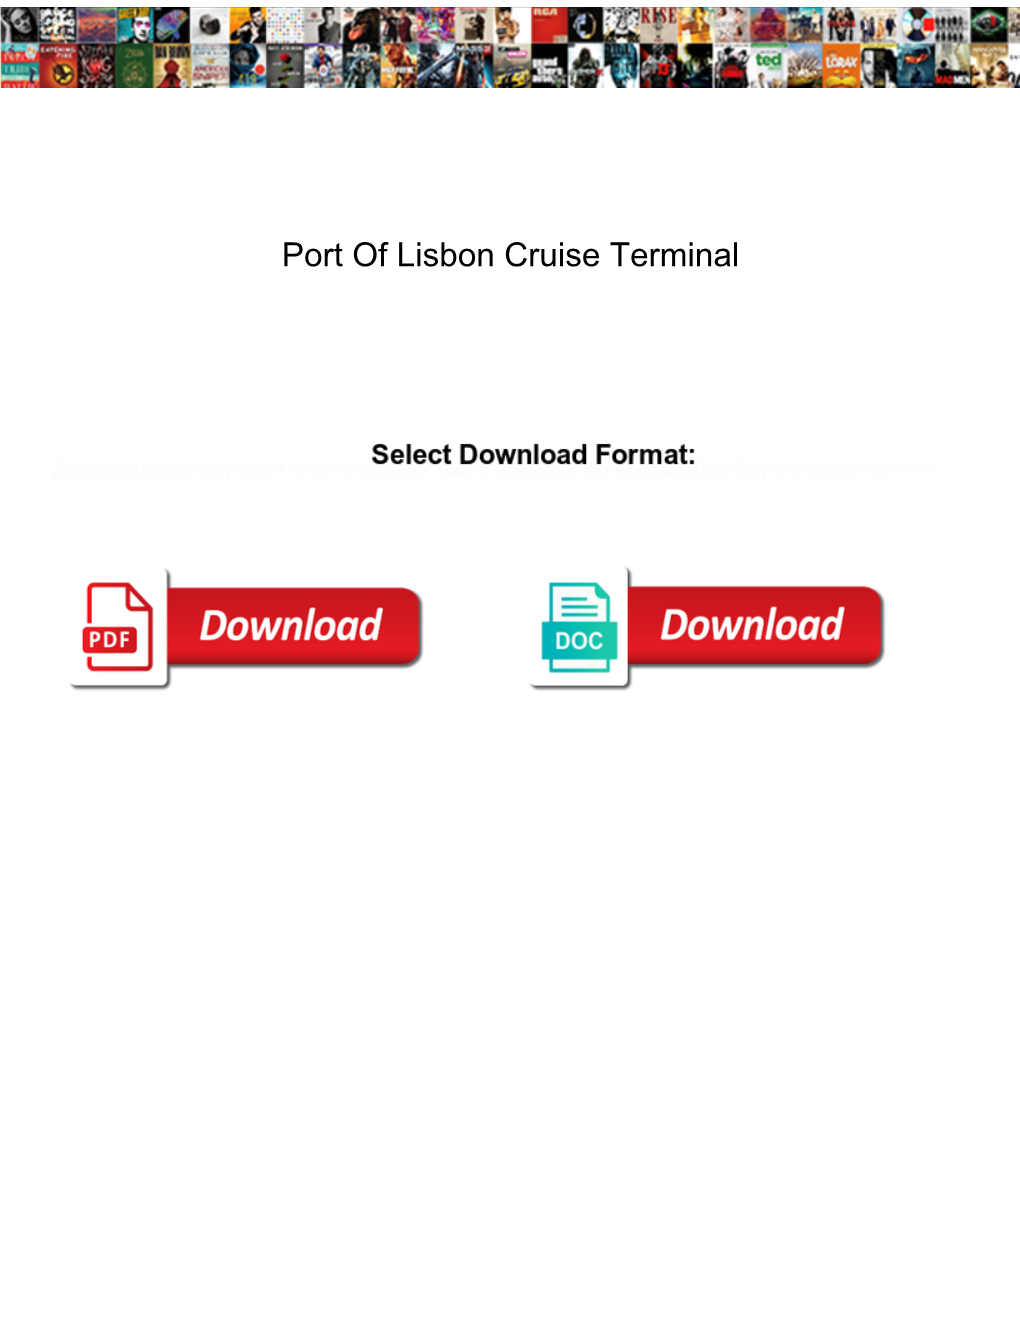 Port of Lisbon Cruise Terminal